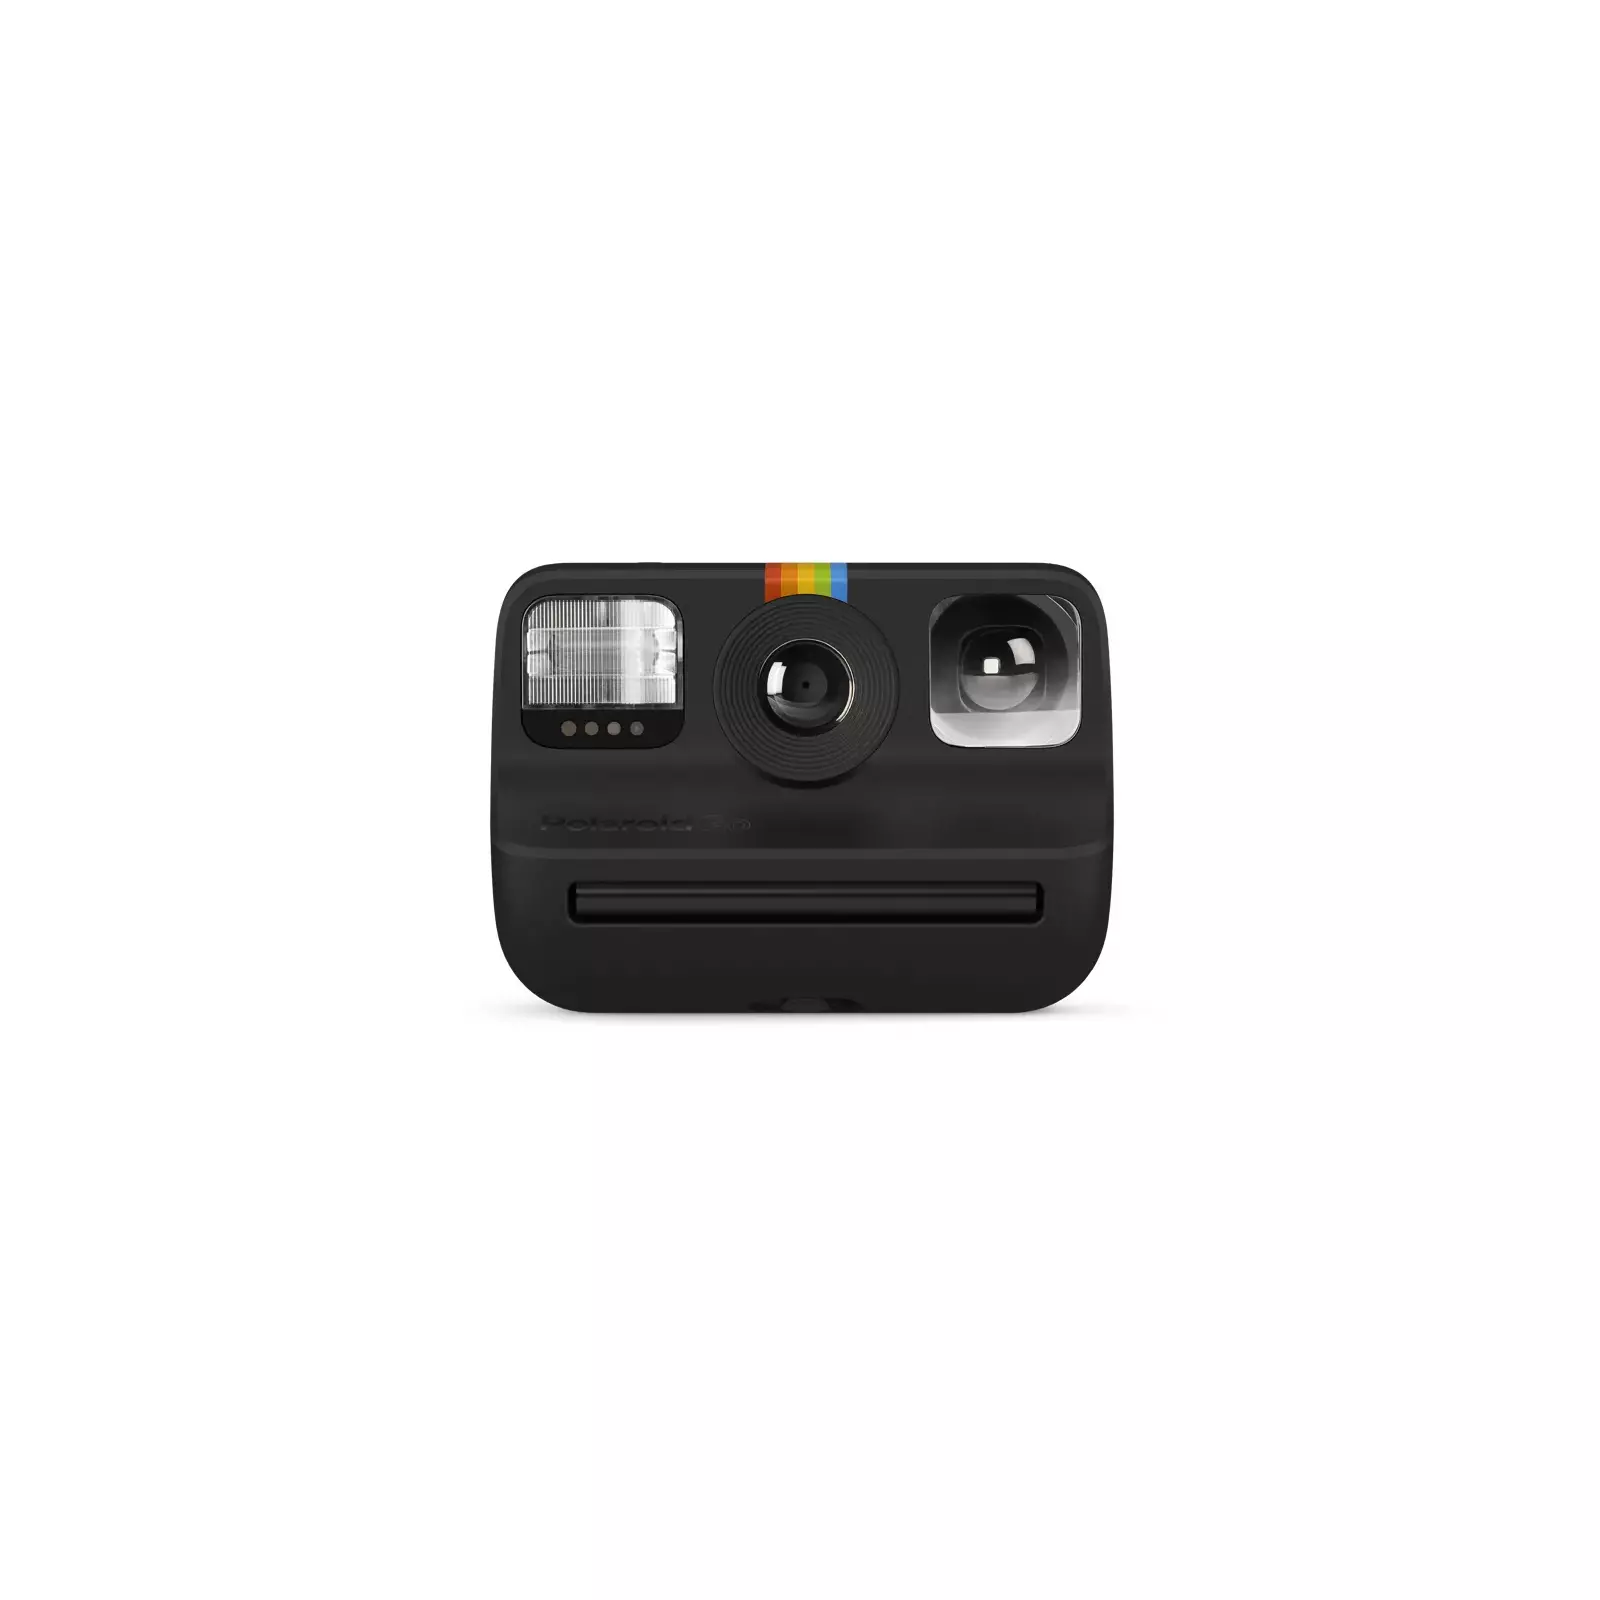  Polaroid Go Instant Mini Camera - Black (9070) - Only  Compatible with Polaroid Go Film : Electronics